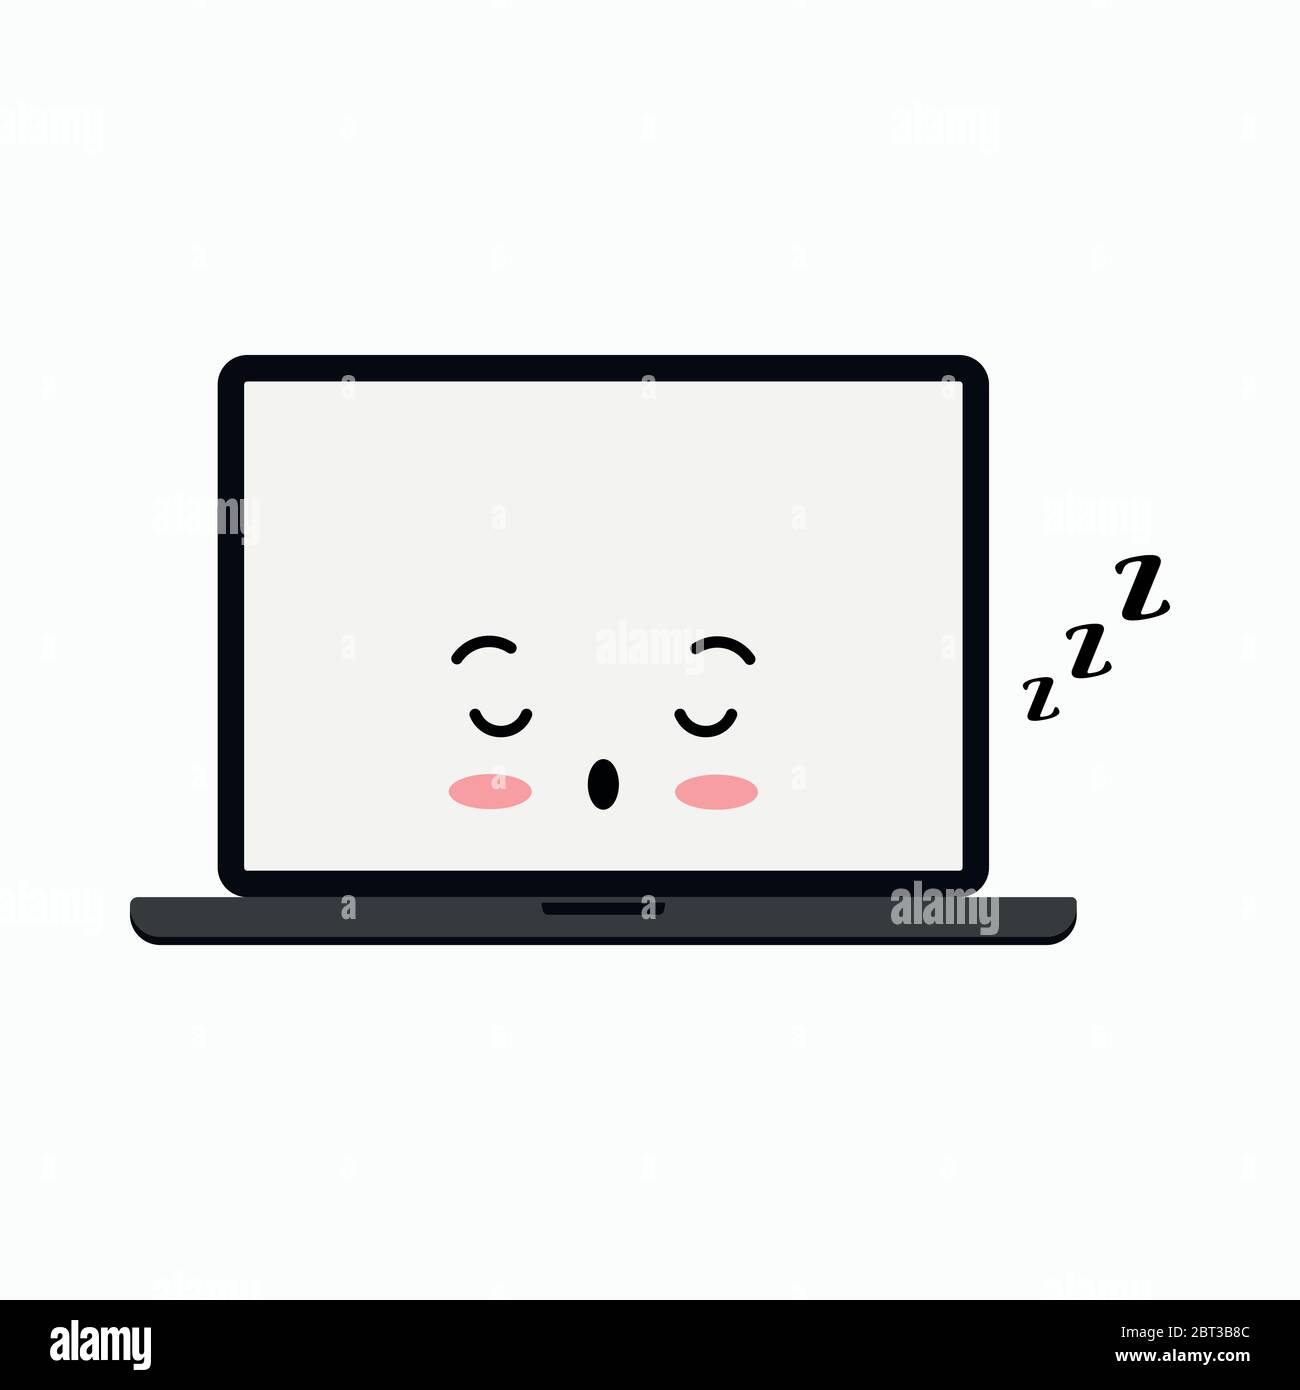 https://c8.alamy.com/comp/2BT3B8C/sleeping-off-laptop-cute-emoji-vector-icon-isolated-on-white-background-2BT3B8C.jpg